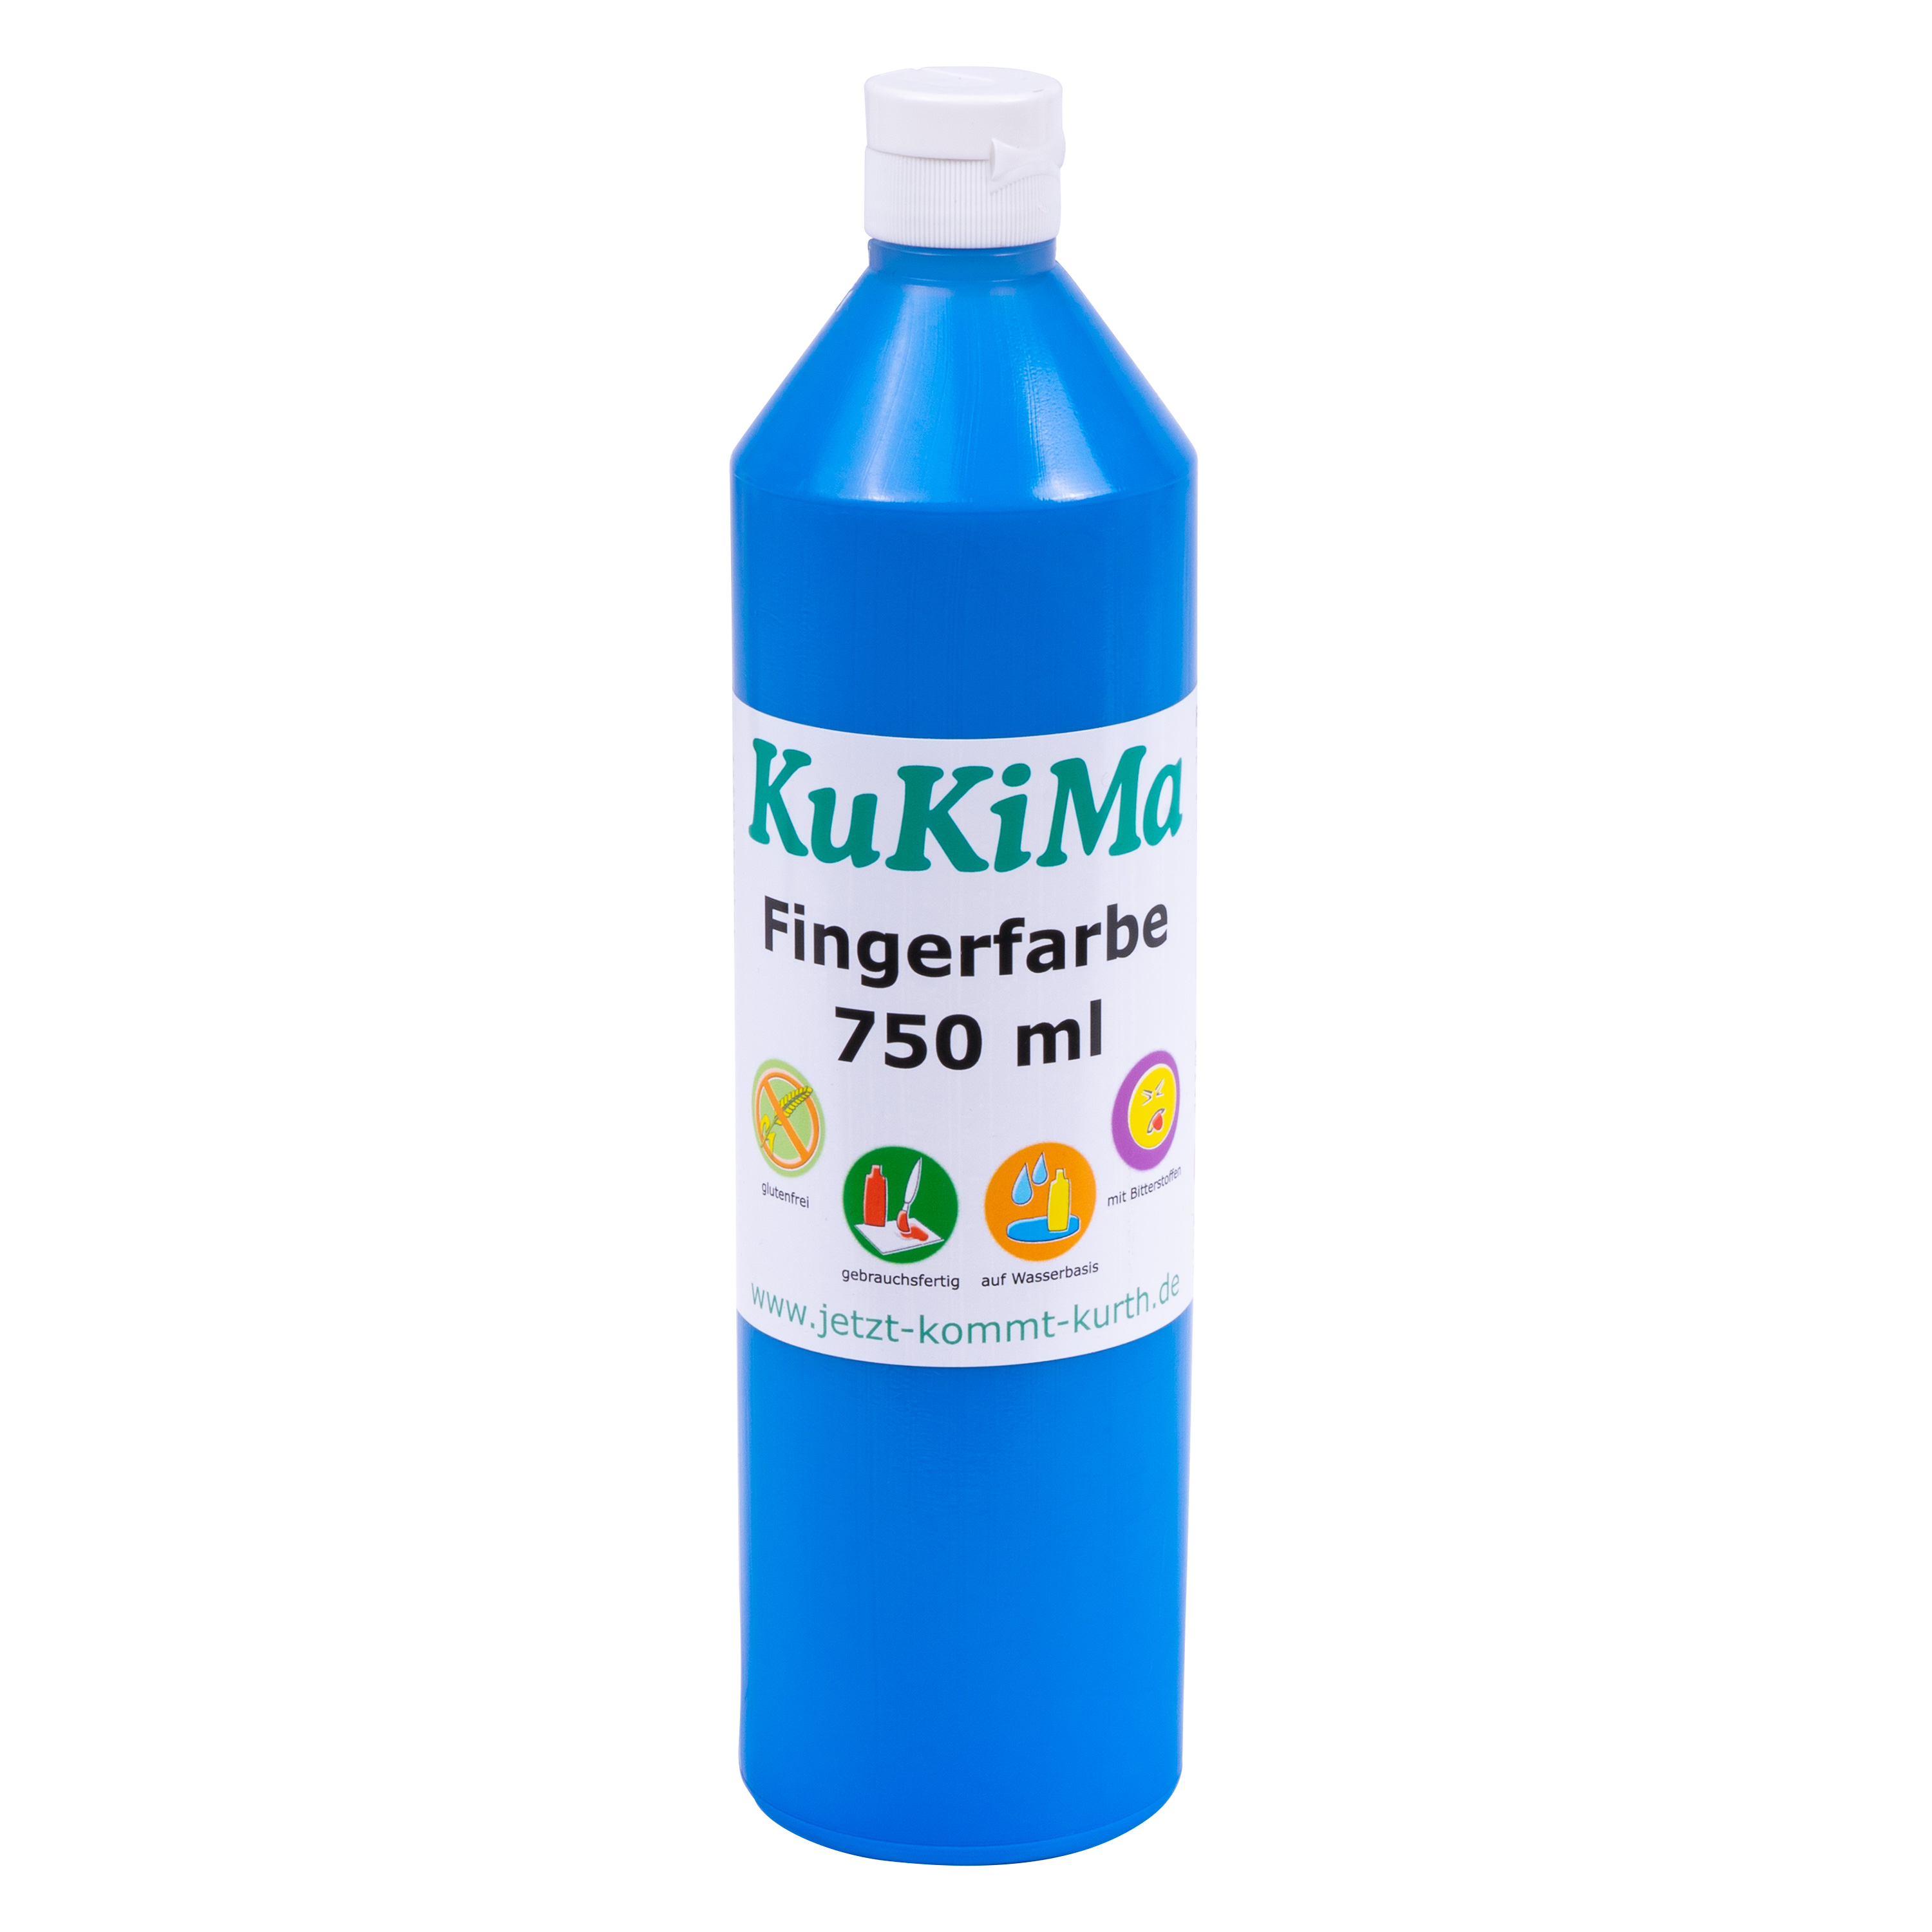 KuKiMa Fingerfarbe 750 ml, blau